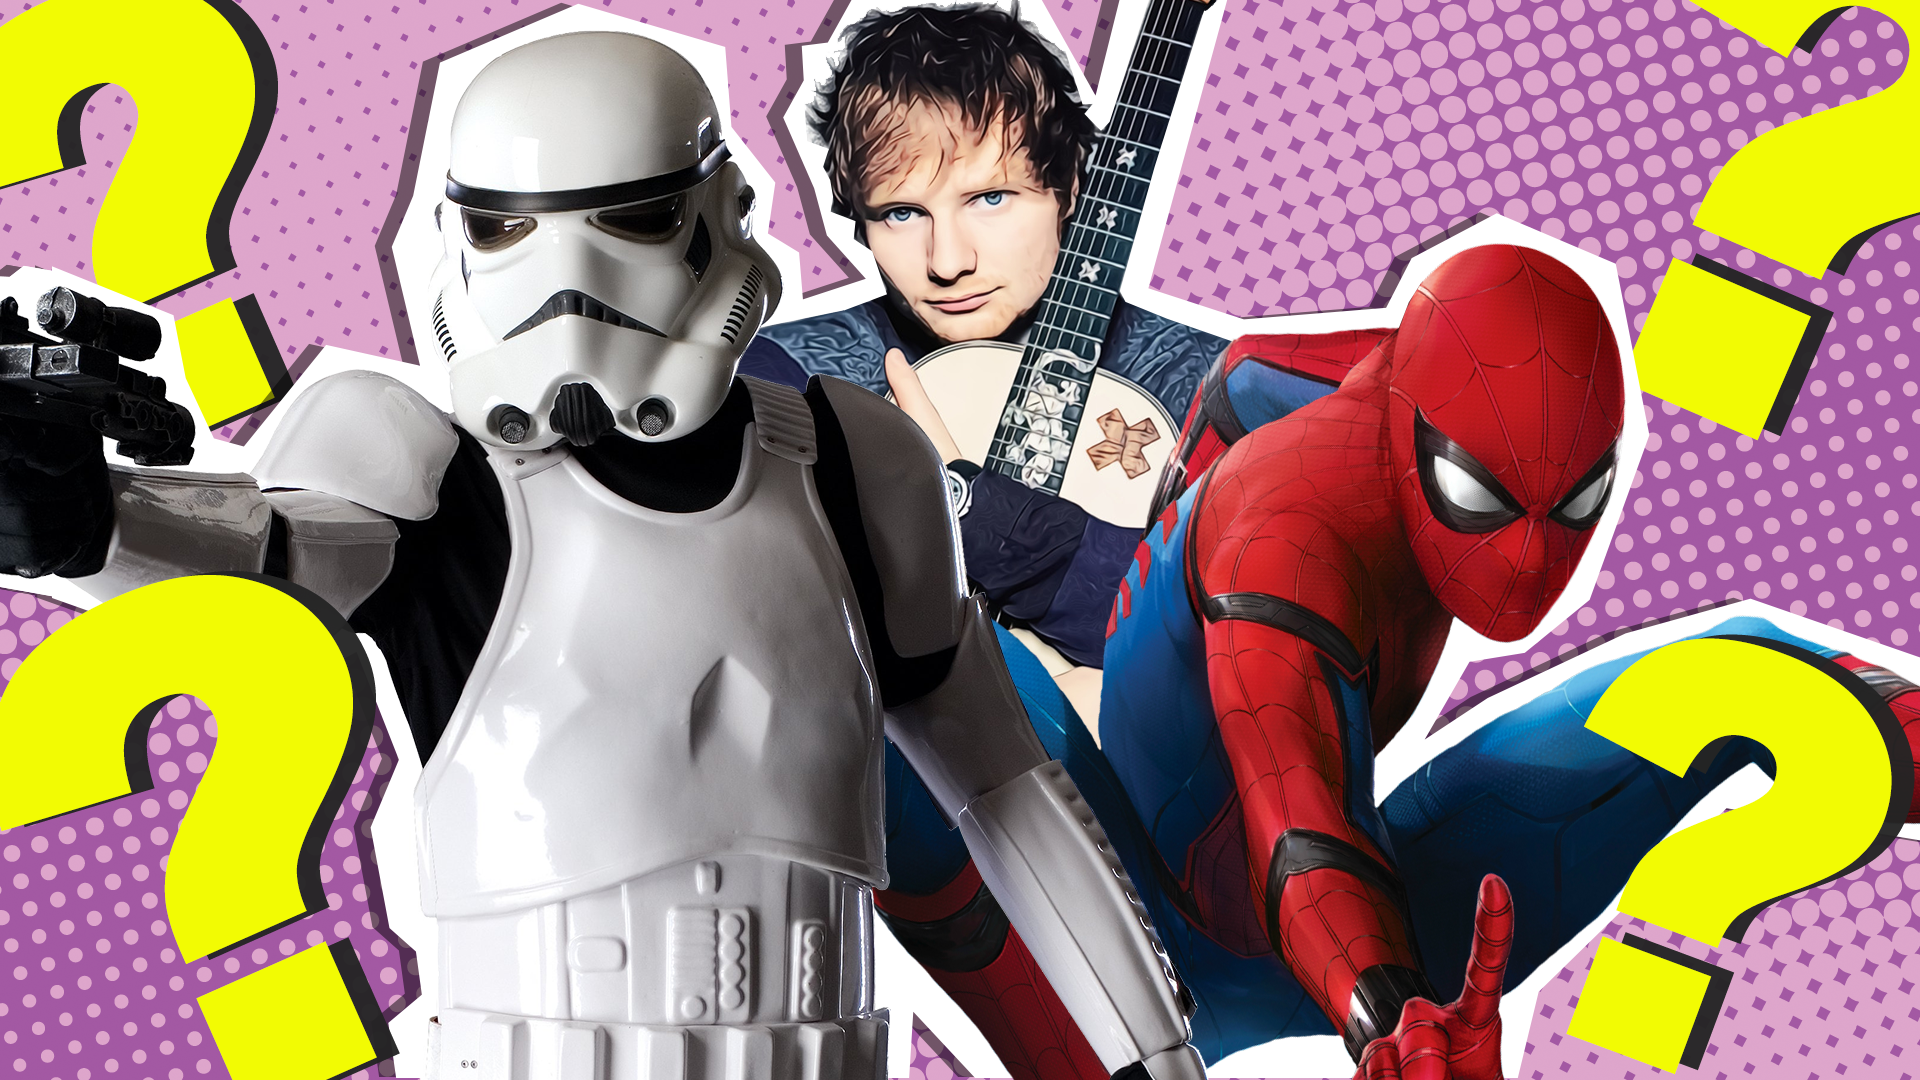 Stormtrooper, Ed Sheeran and Spider-Man